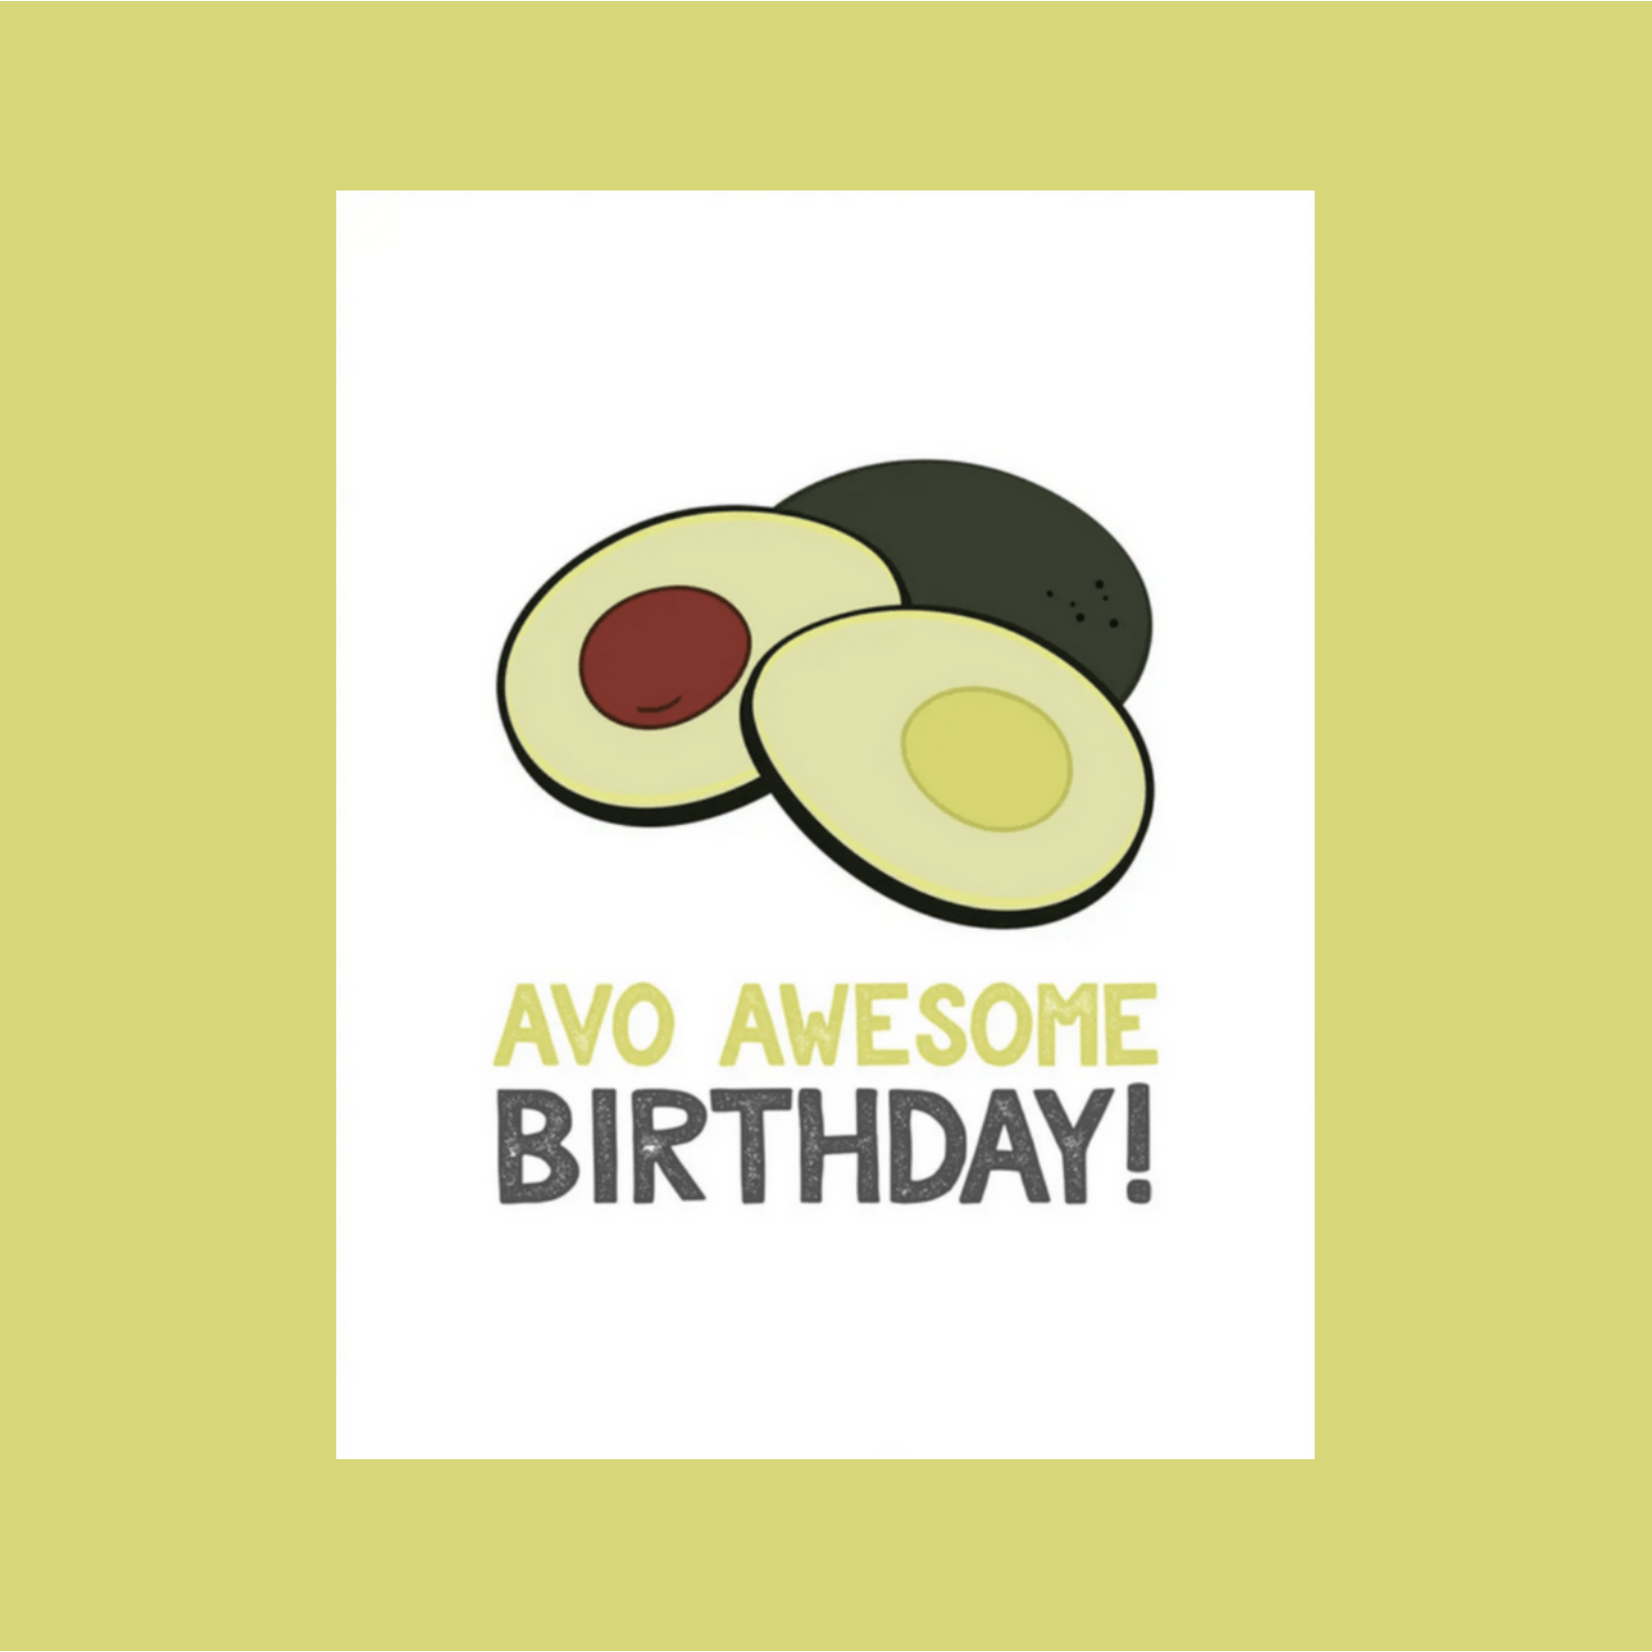 Box Berry Avo Awesome (Avocado) Birthday Greeting Card